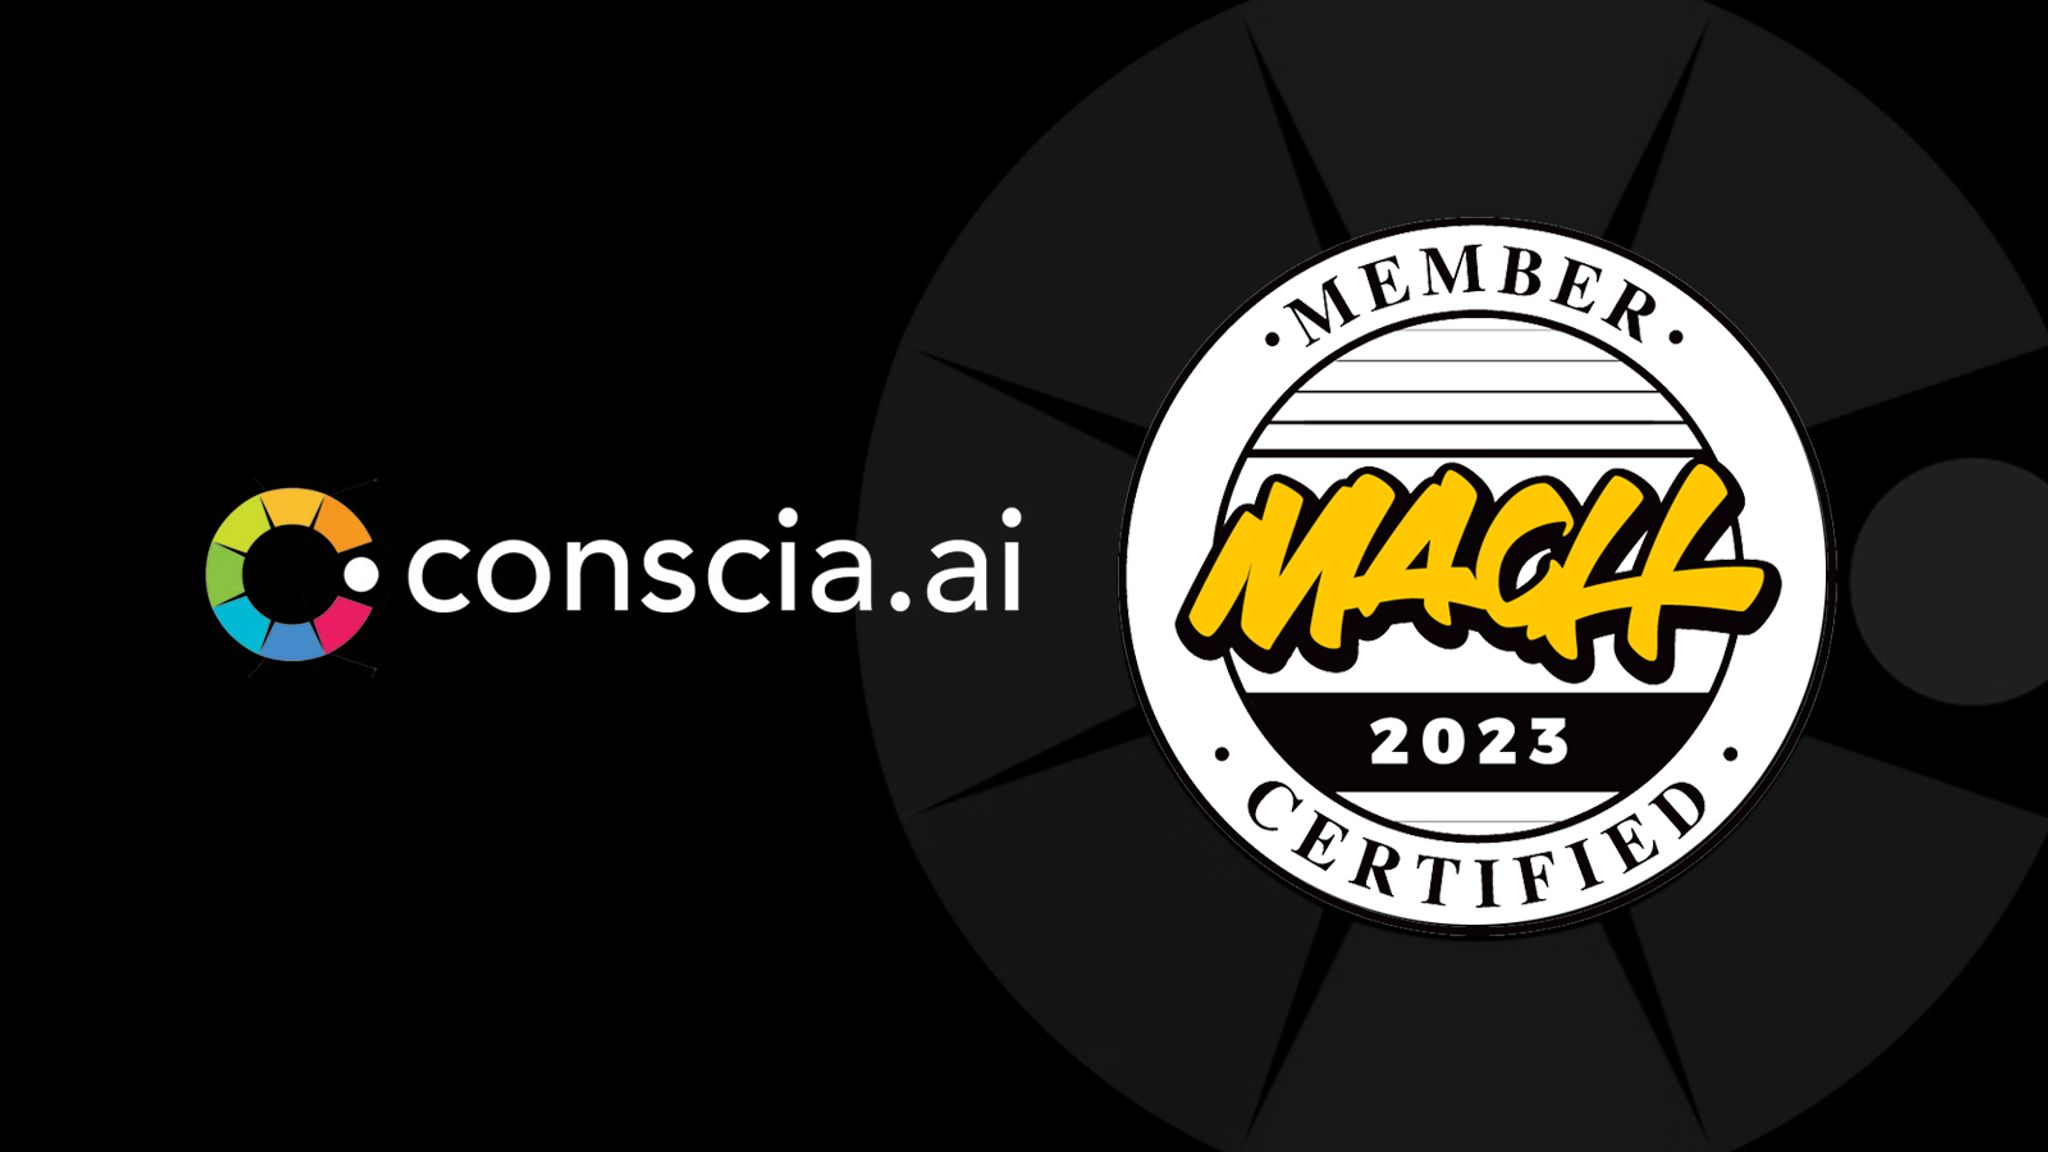 Conscia.ai logo and MACH Certified badge 